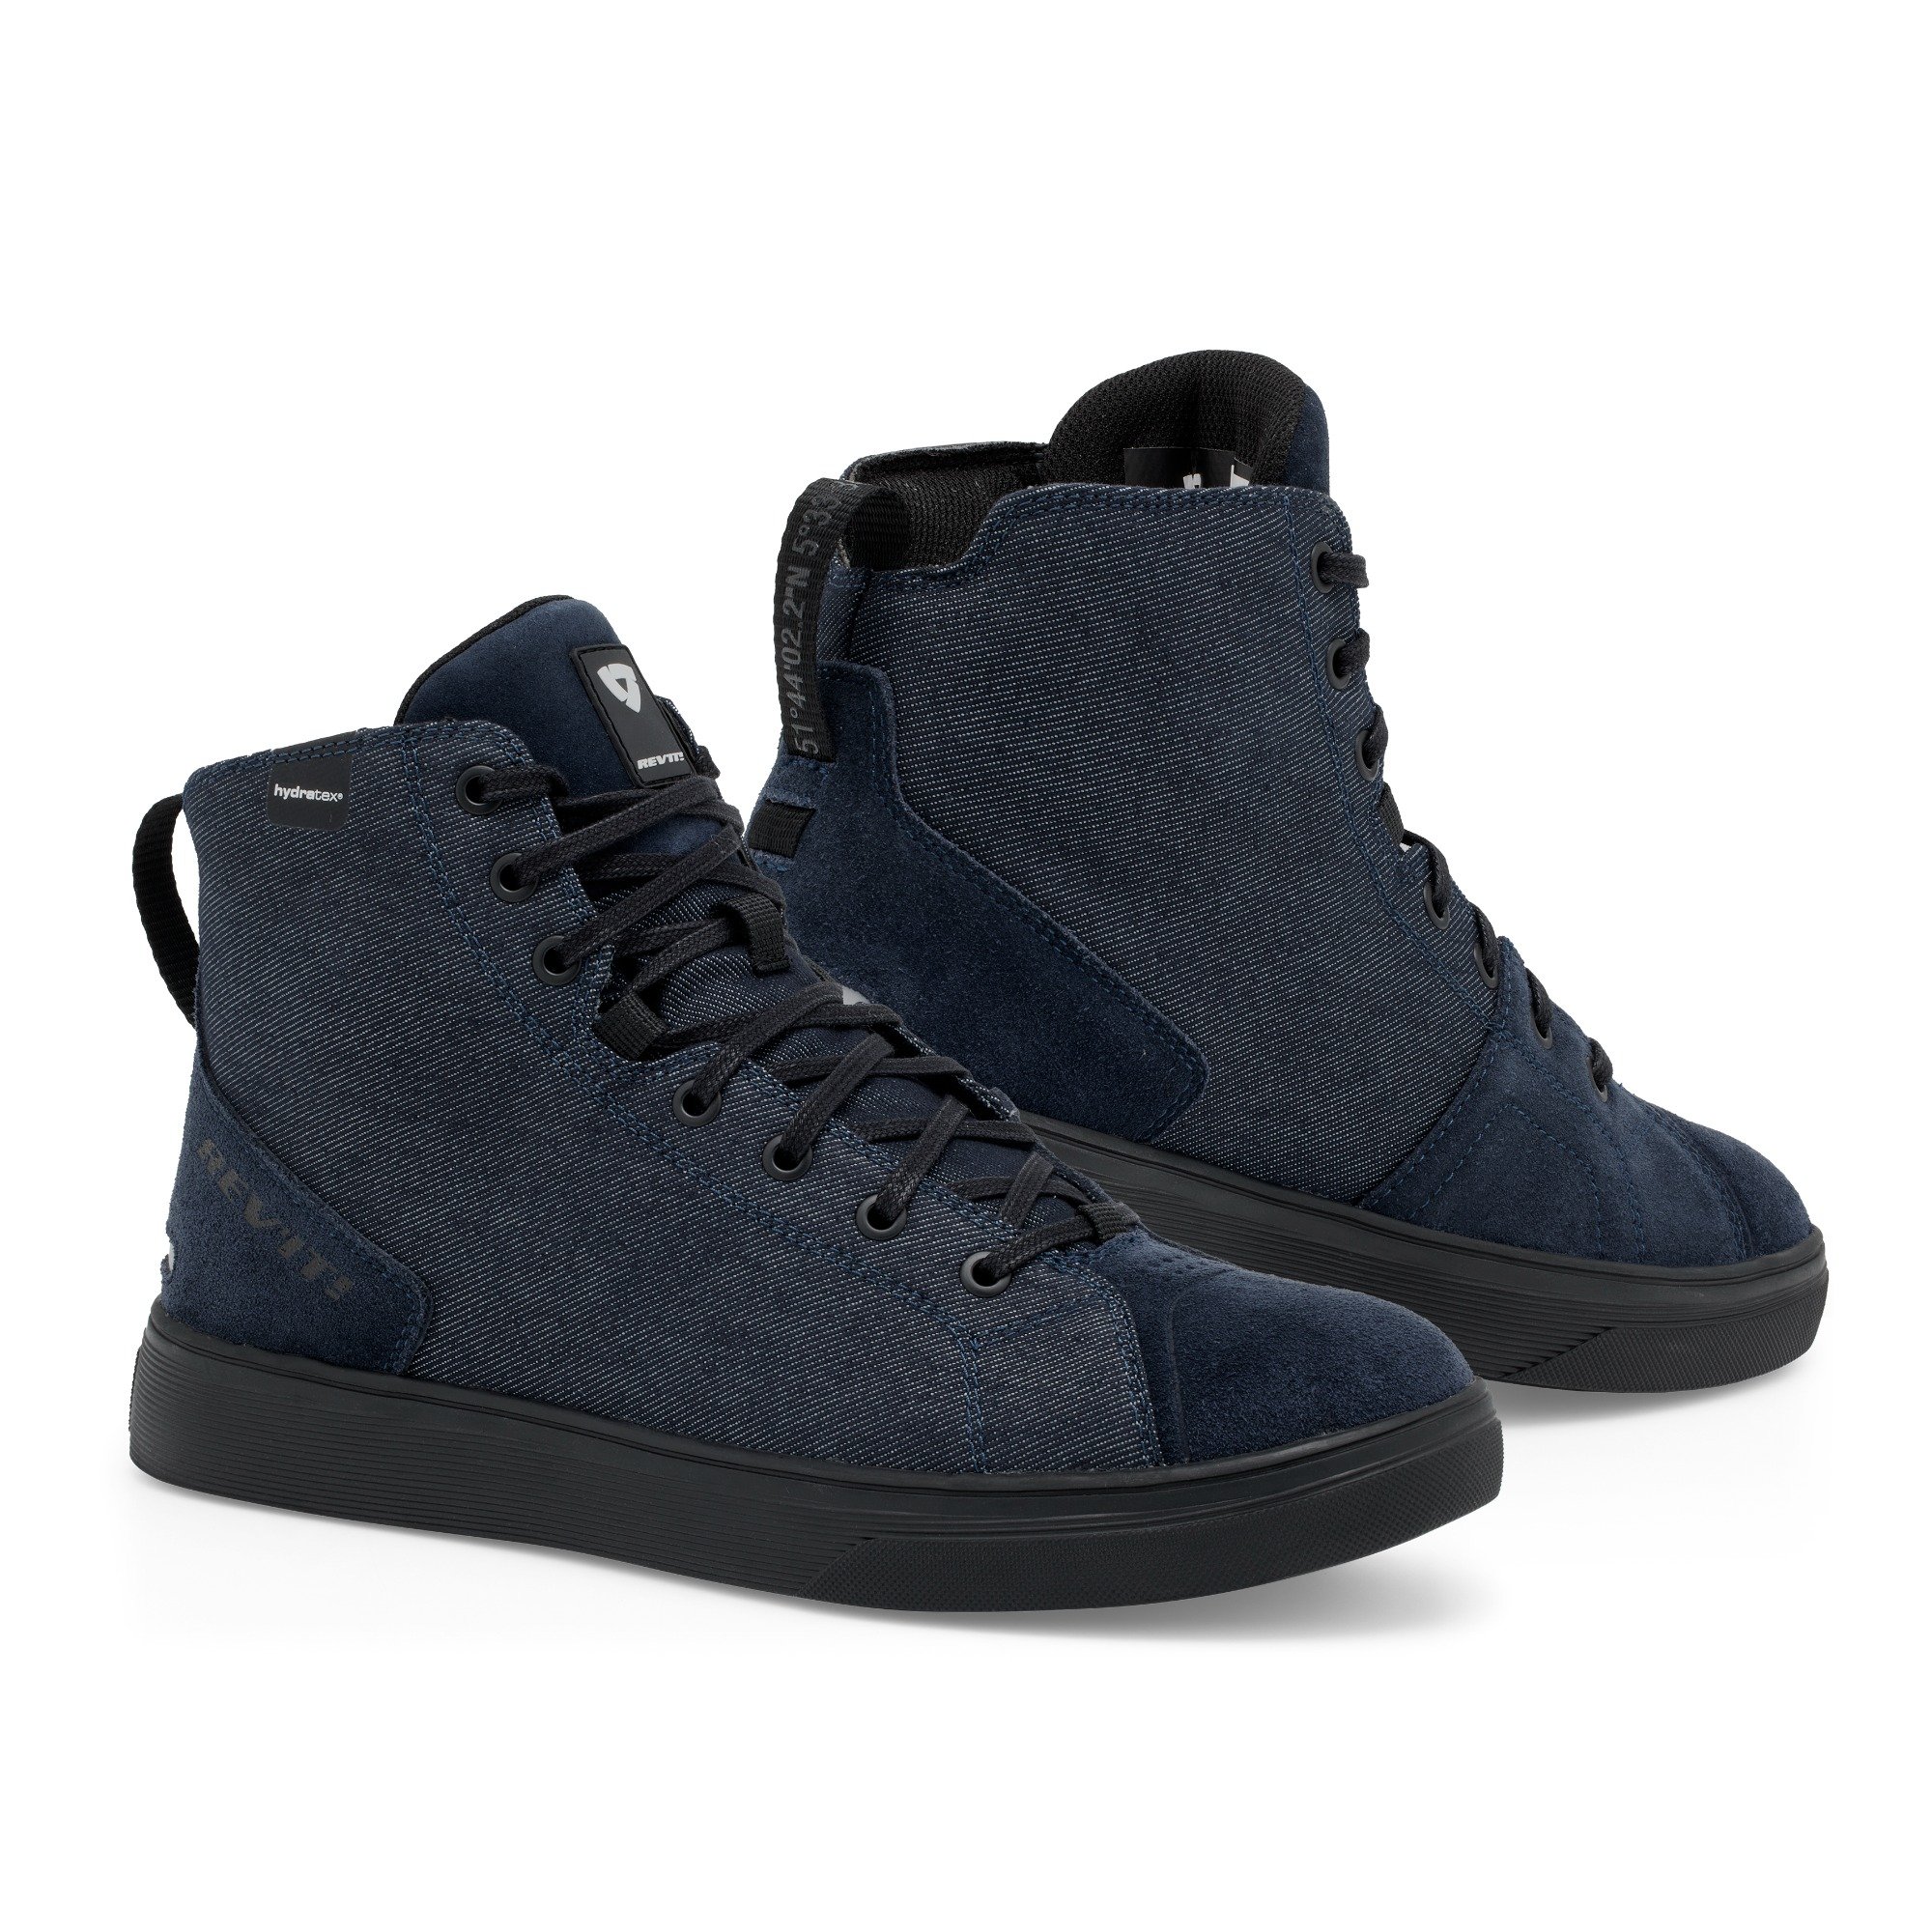 Image of REV'IT! Delta H2O Shoes Dark Blue Black Size 44 ID 8700001356473